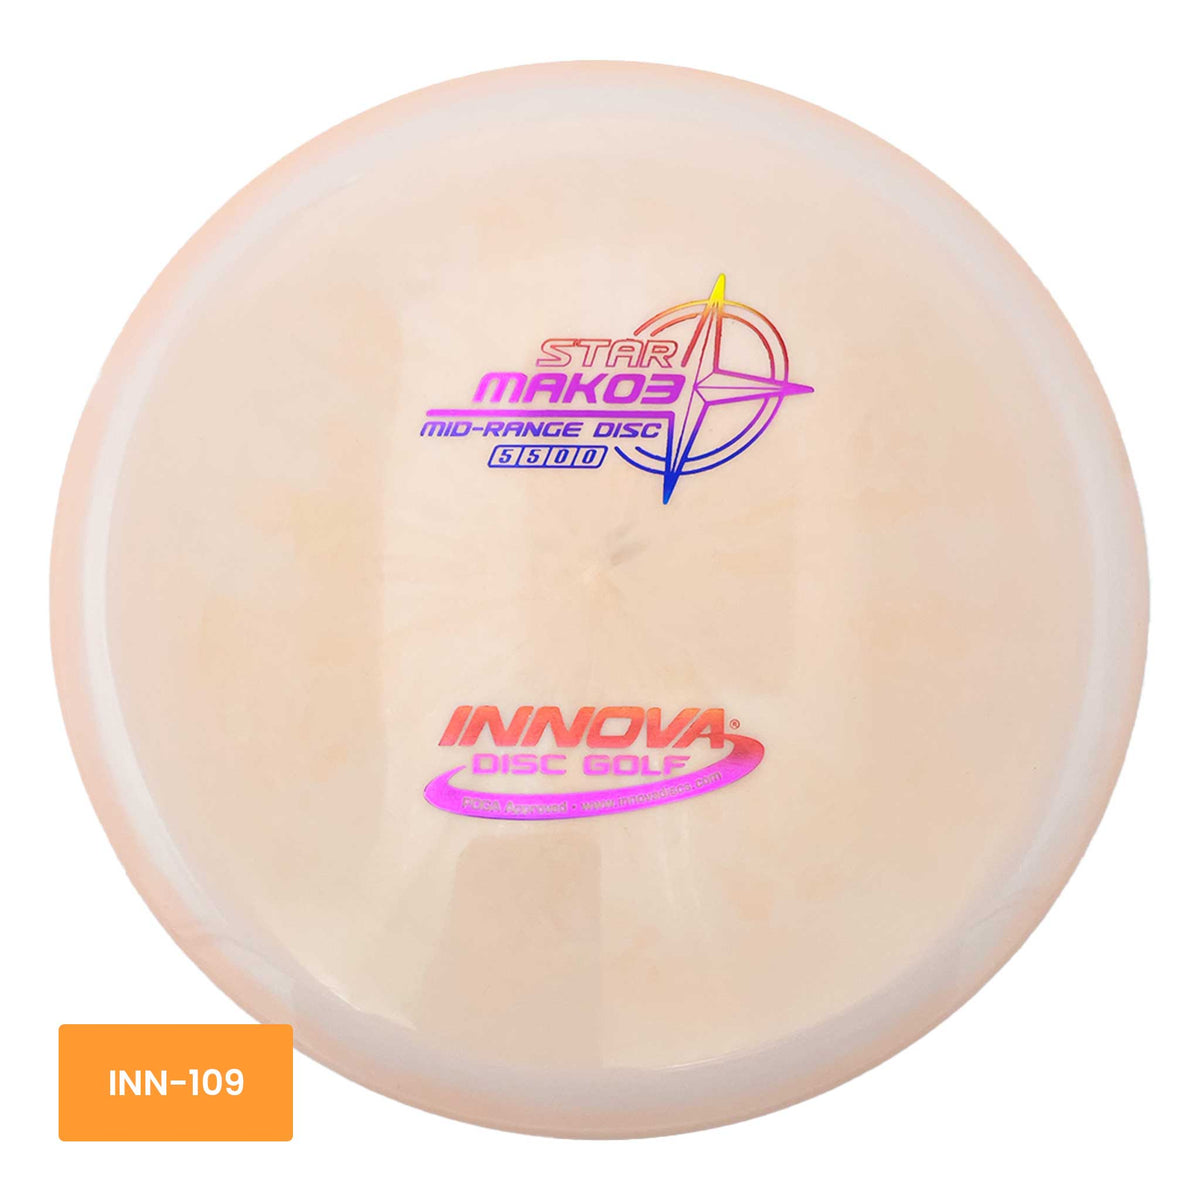 Innova Disc golf Star Mako3 midrange - Light Pink